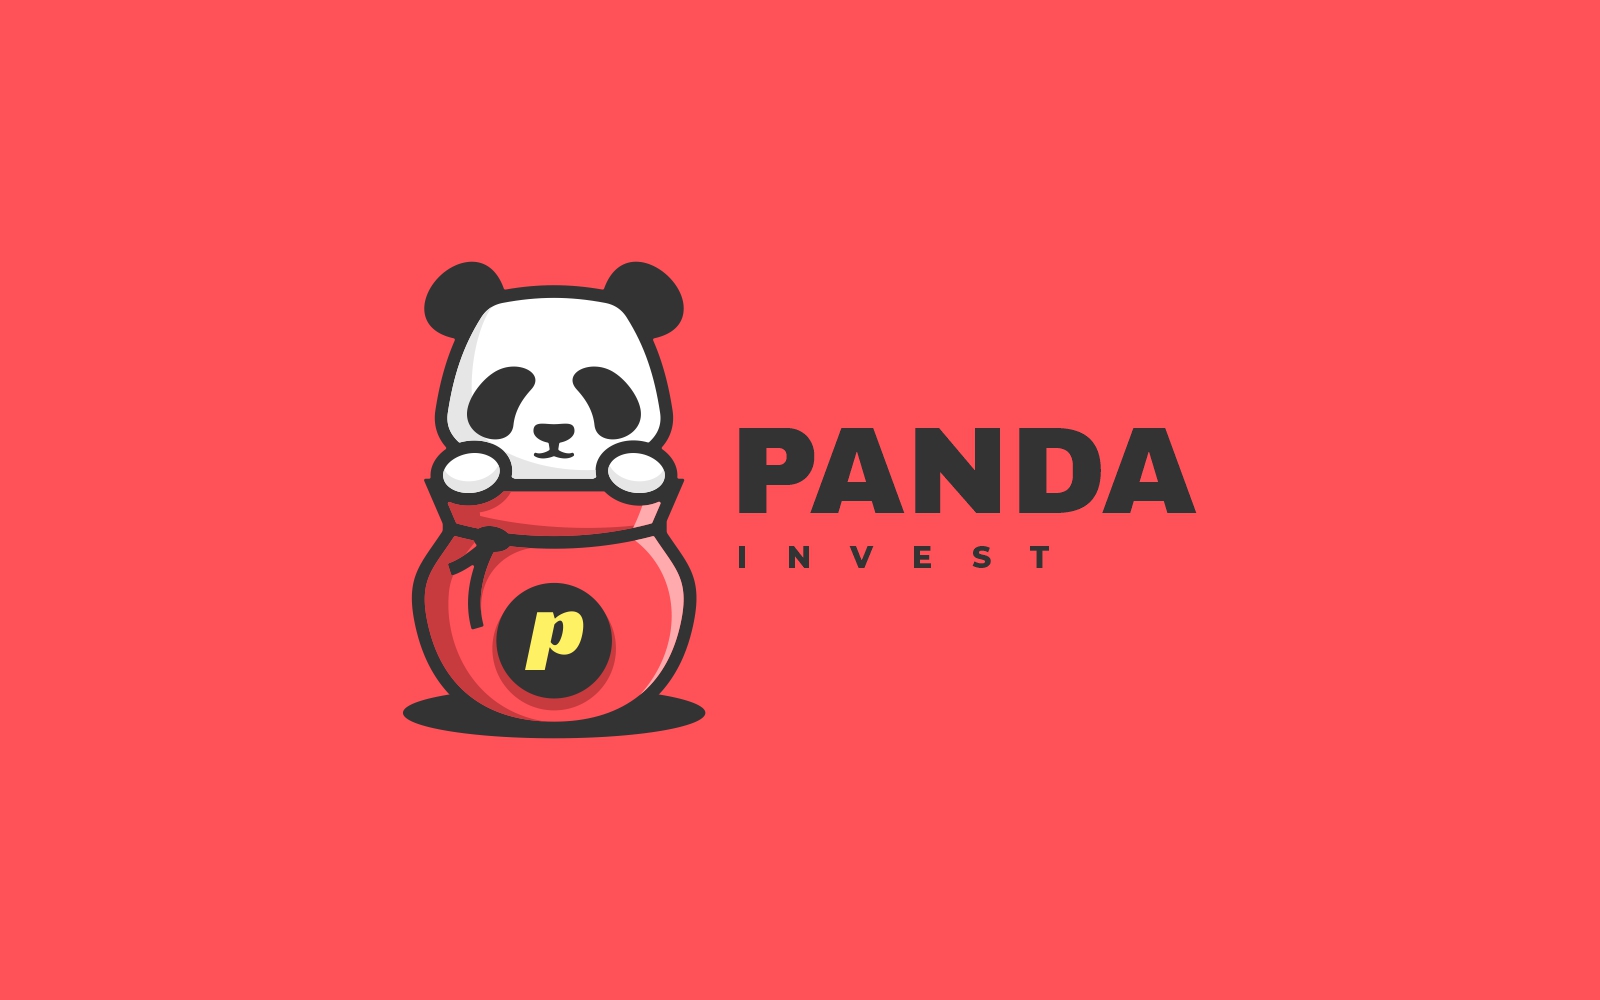 Panda Invest Simple Mascot Logo